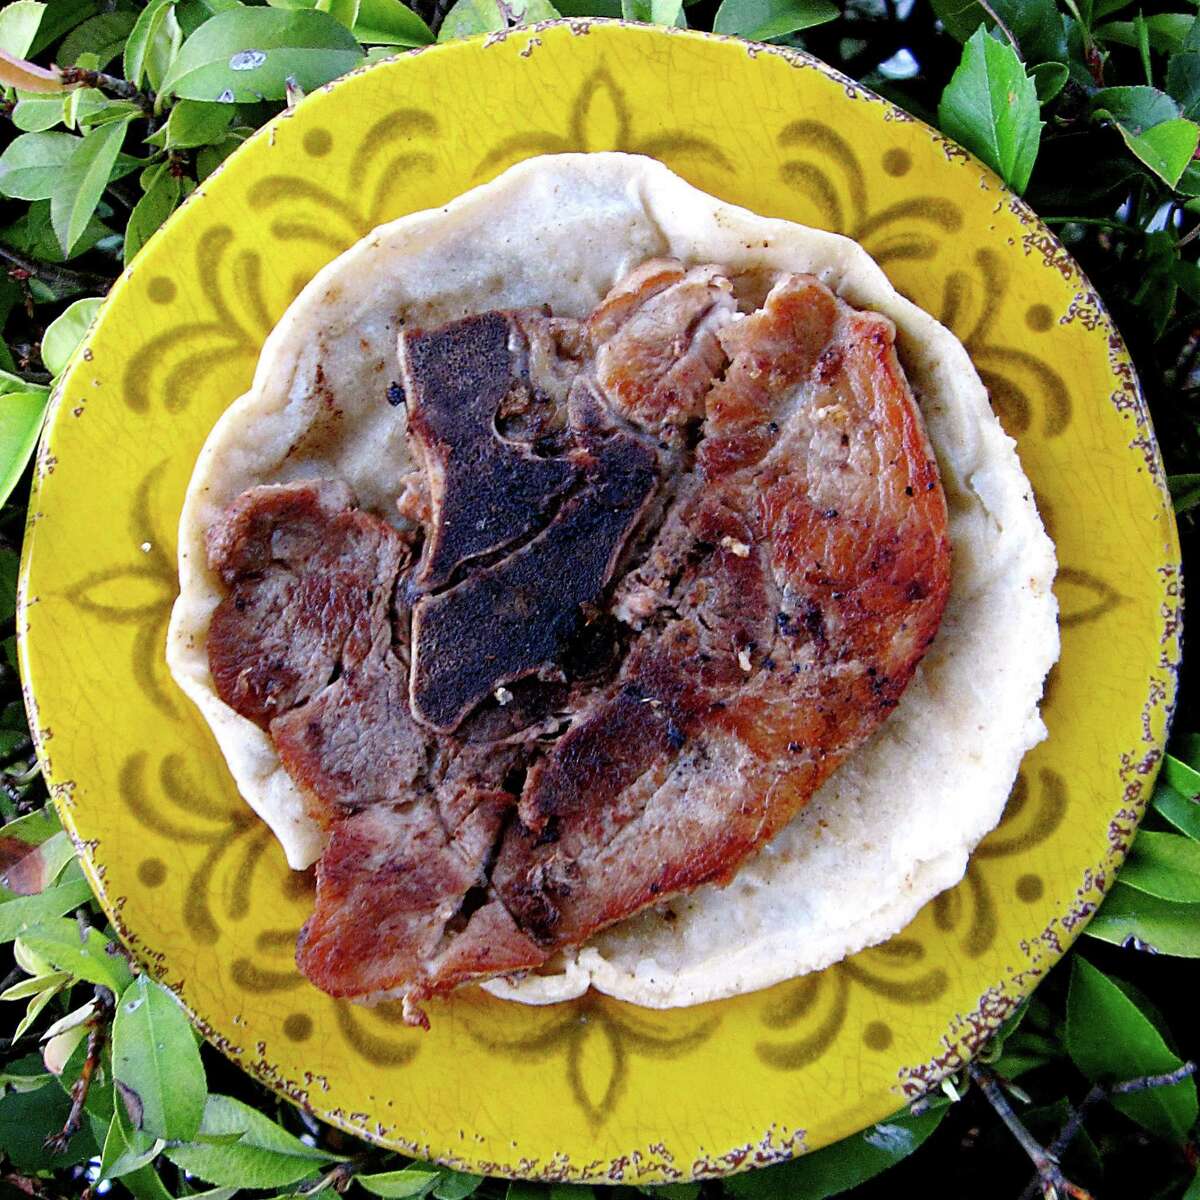 Pork chop taco on a handmade corn tortilla from Rocky's Taco House.